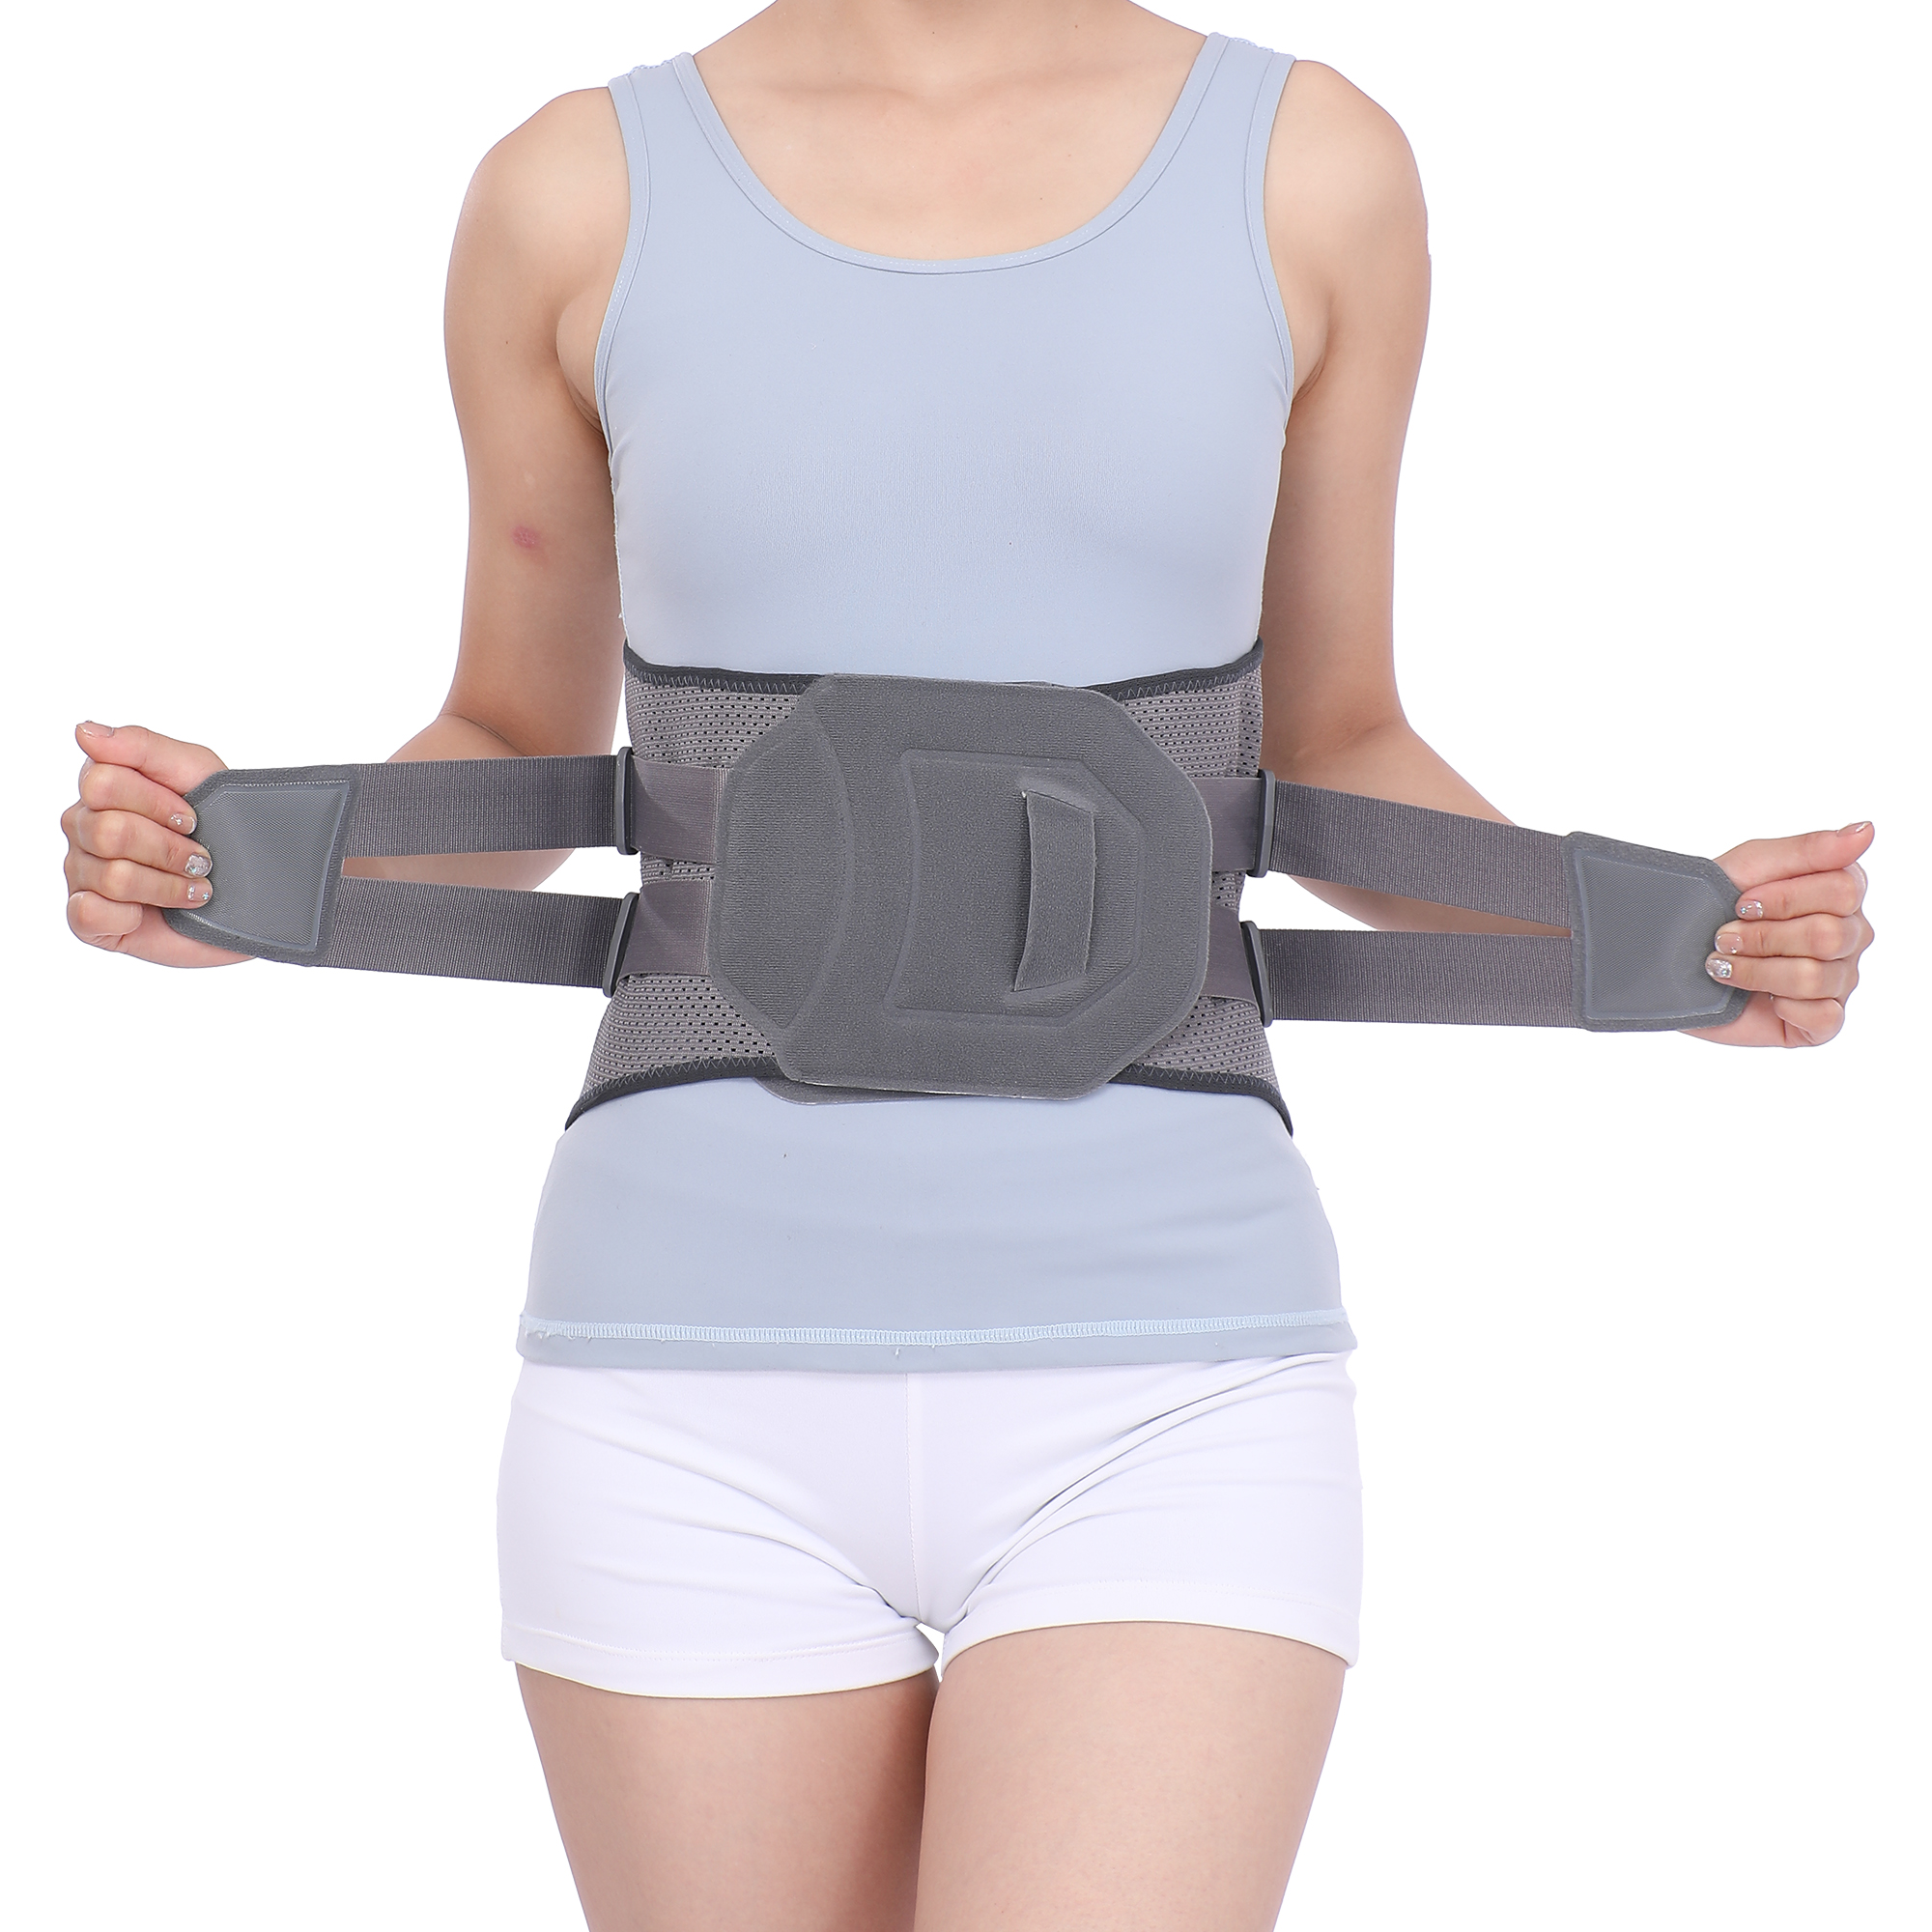 I-Lumbar Back Brace Waist Support Orthosis Adjustable Back Support